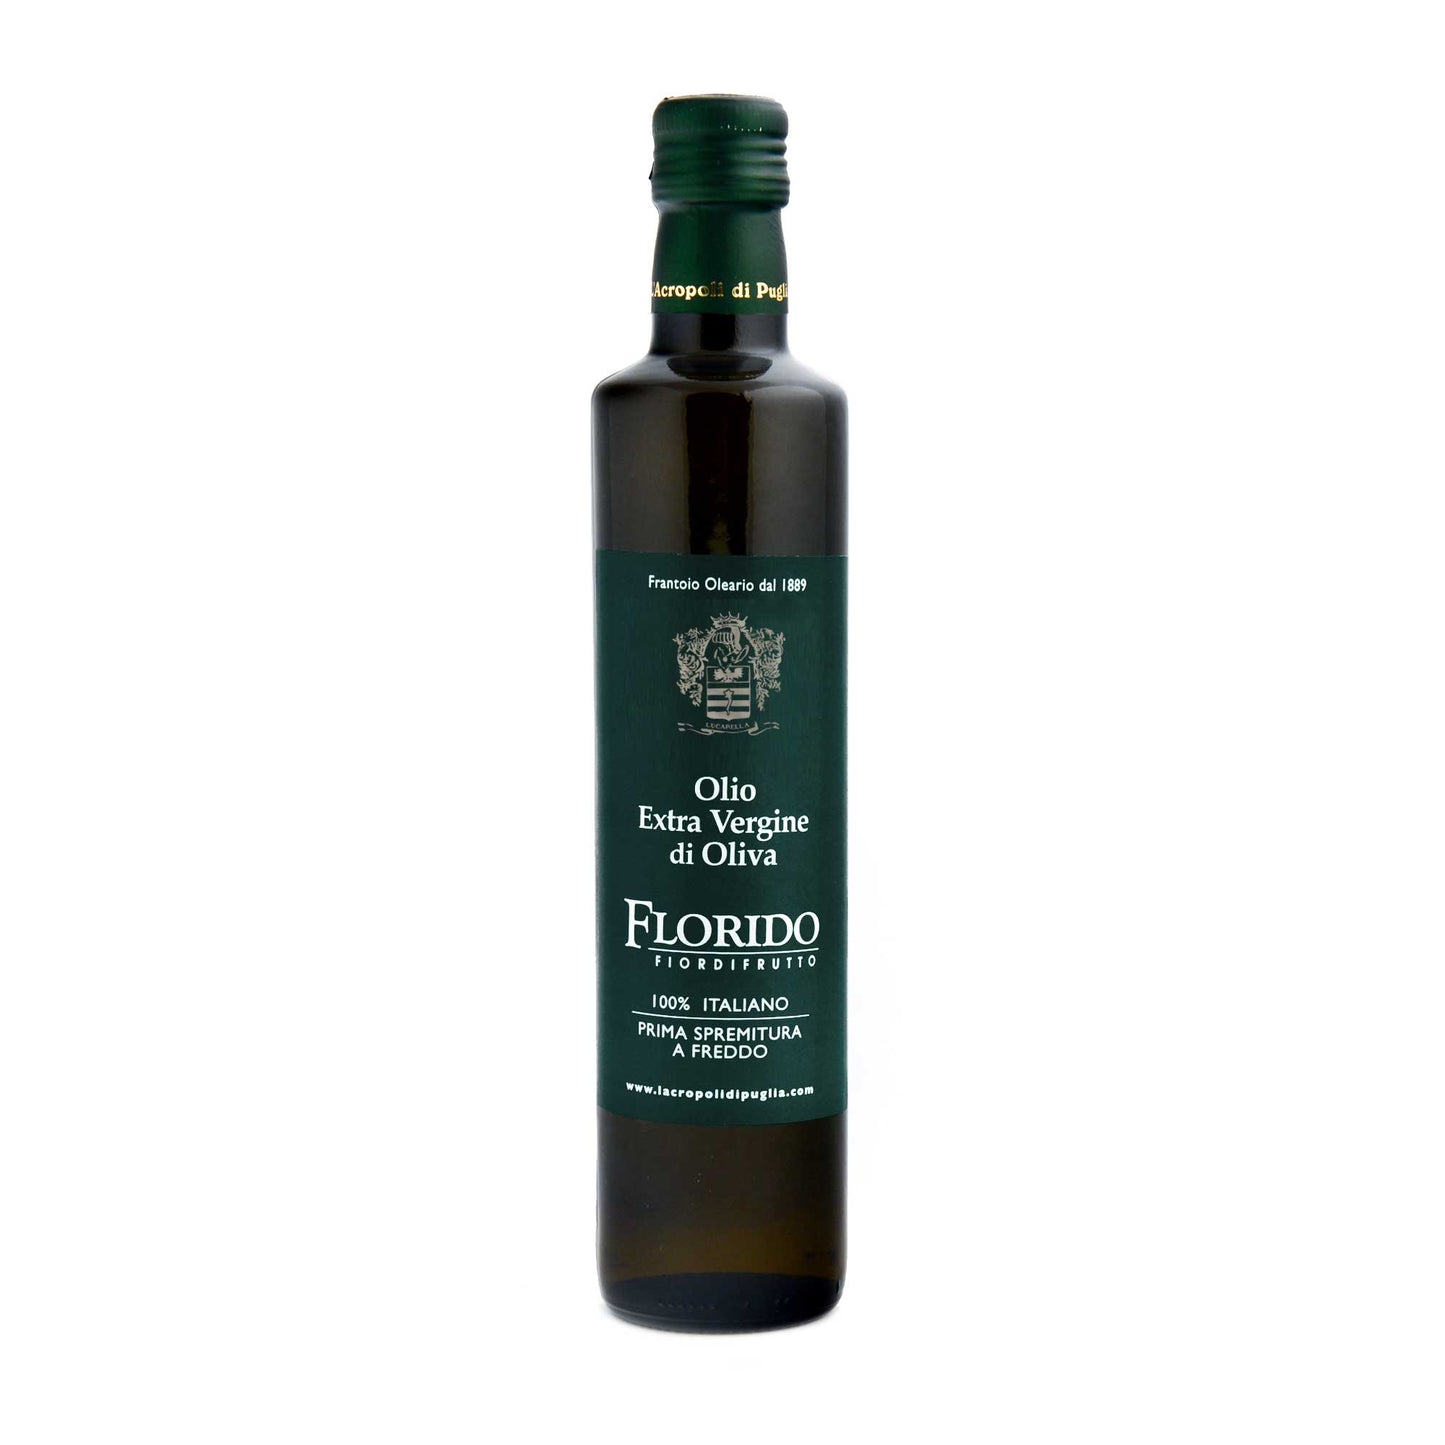 Extra Virgin olive oil Florido lt 500 ml